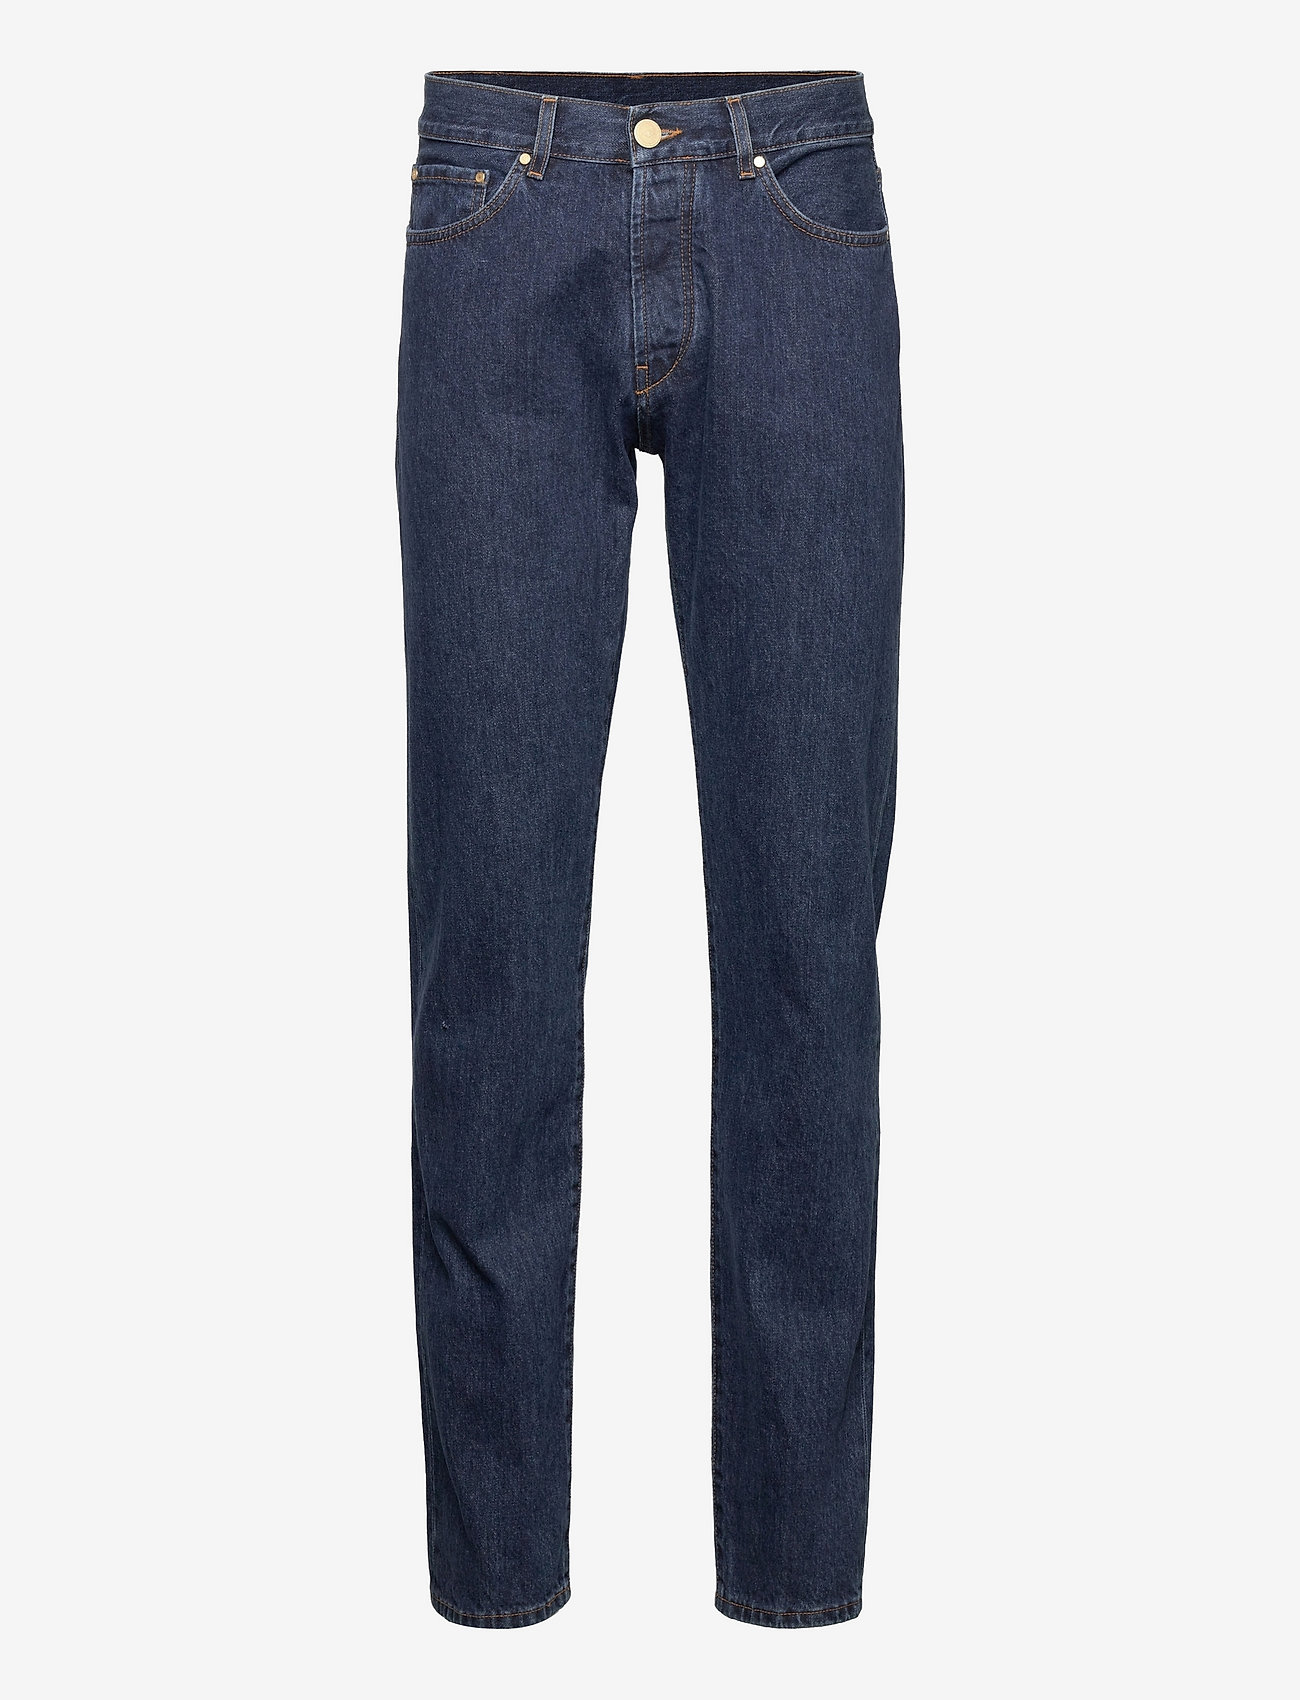 HAN Kjøbenhavn - Tapered Jeans - džinsi - medium blue - 0